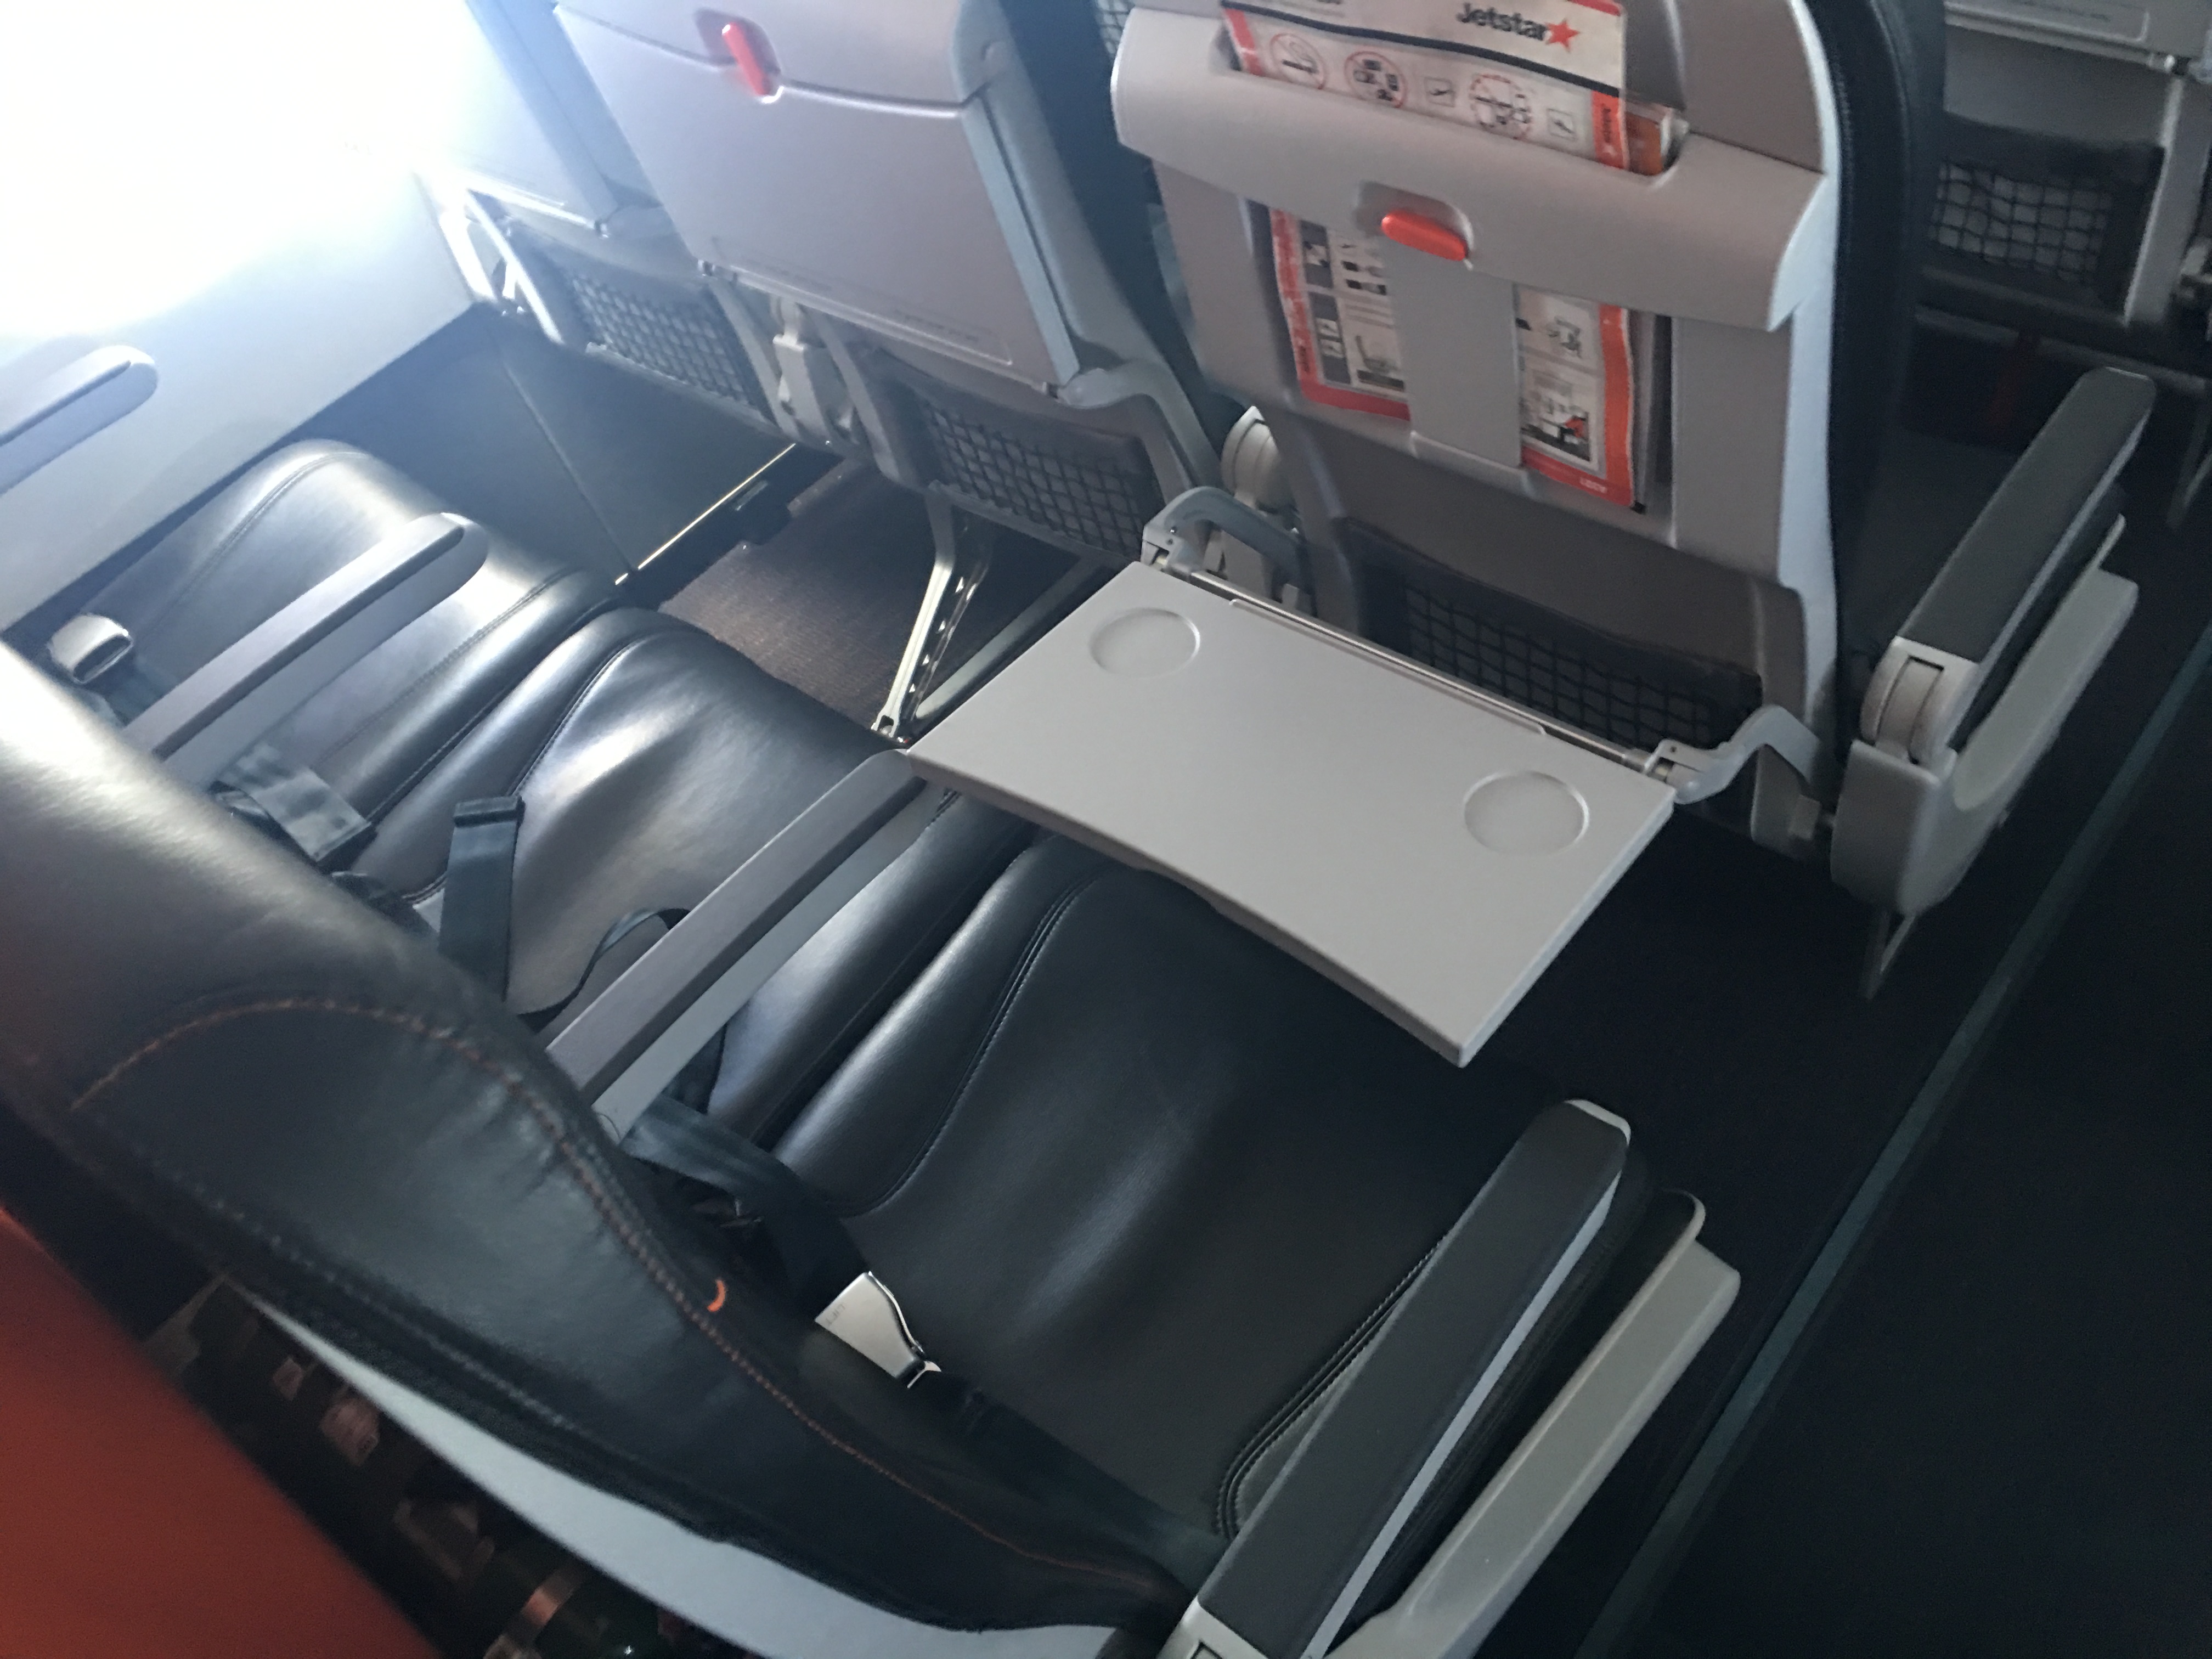 Jetstar A321 Economy Class Review | Point Hacks